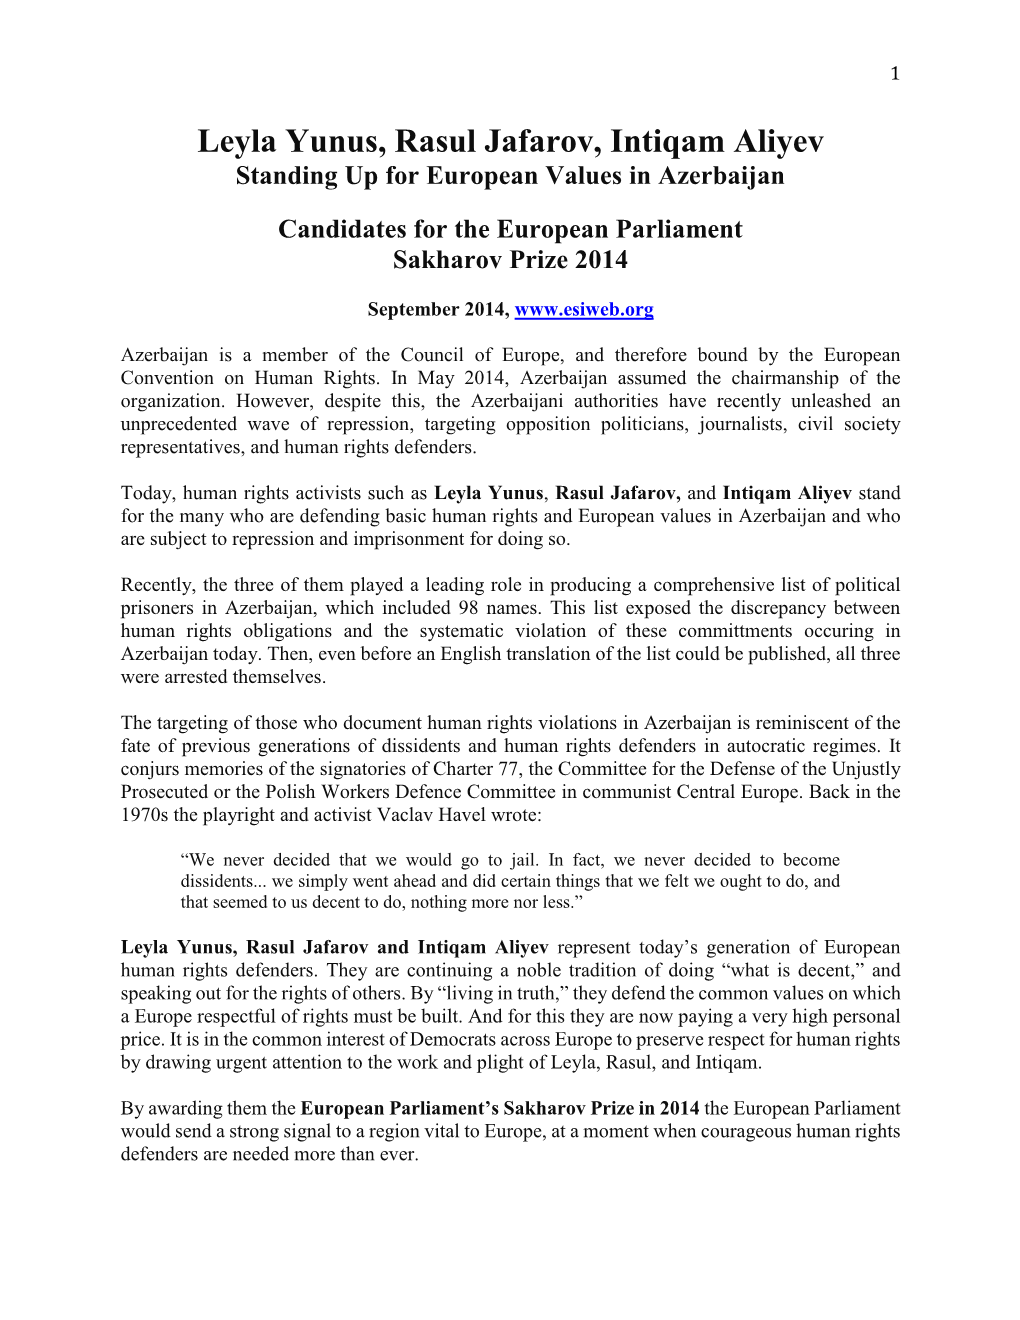 Leyla Yunus, Rasul Jafarov, Intiqam Aliyev Standing up for European Values in Azerbaijan